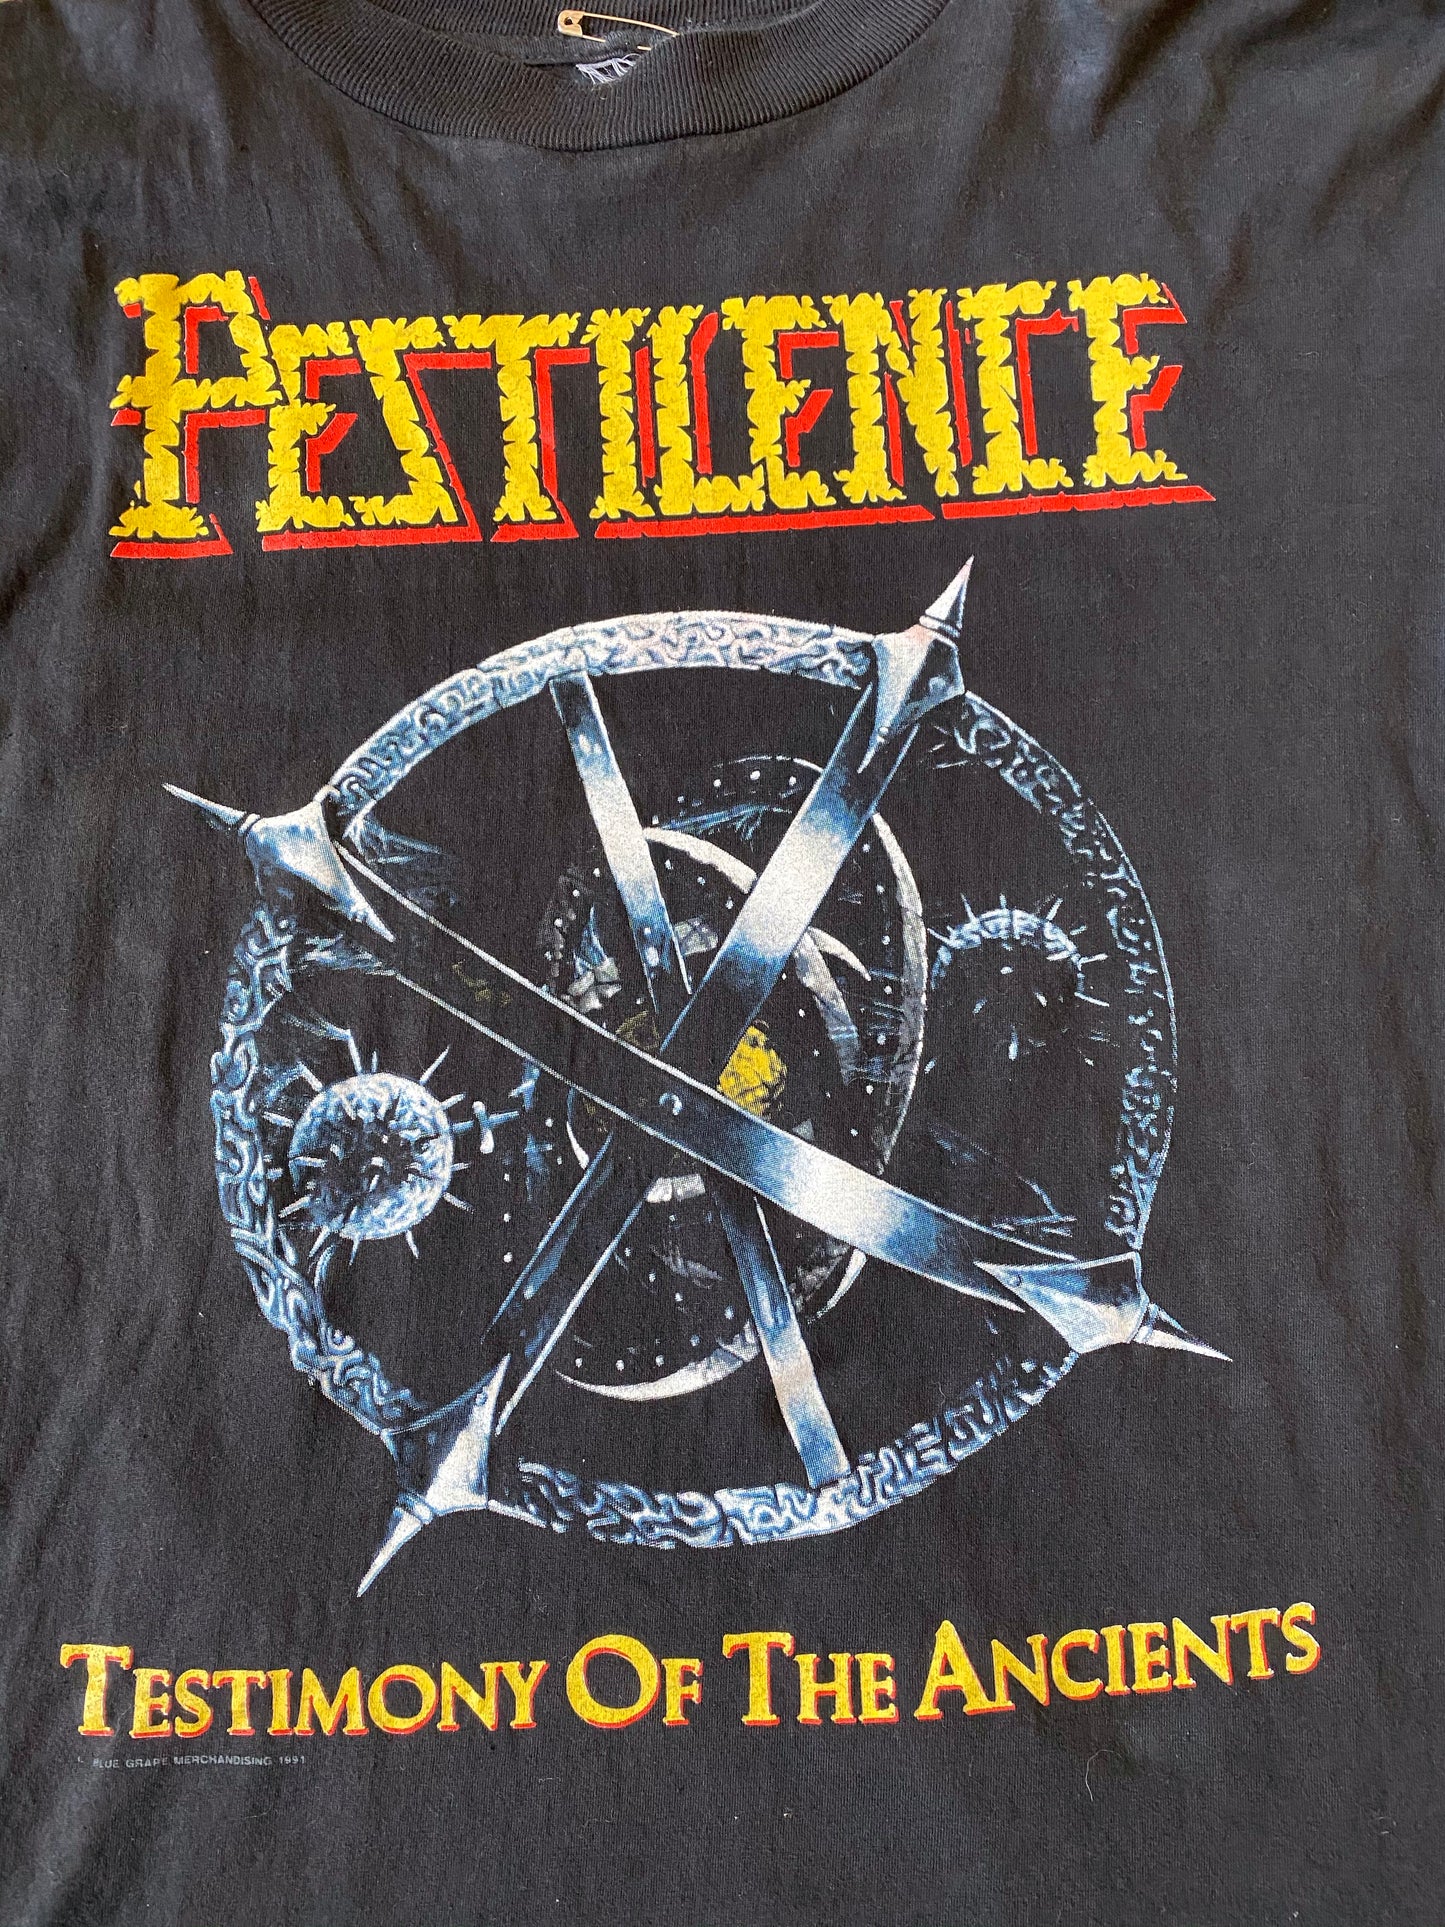 91/92 Pestilence Presence of the Pest Tour Shirt